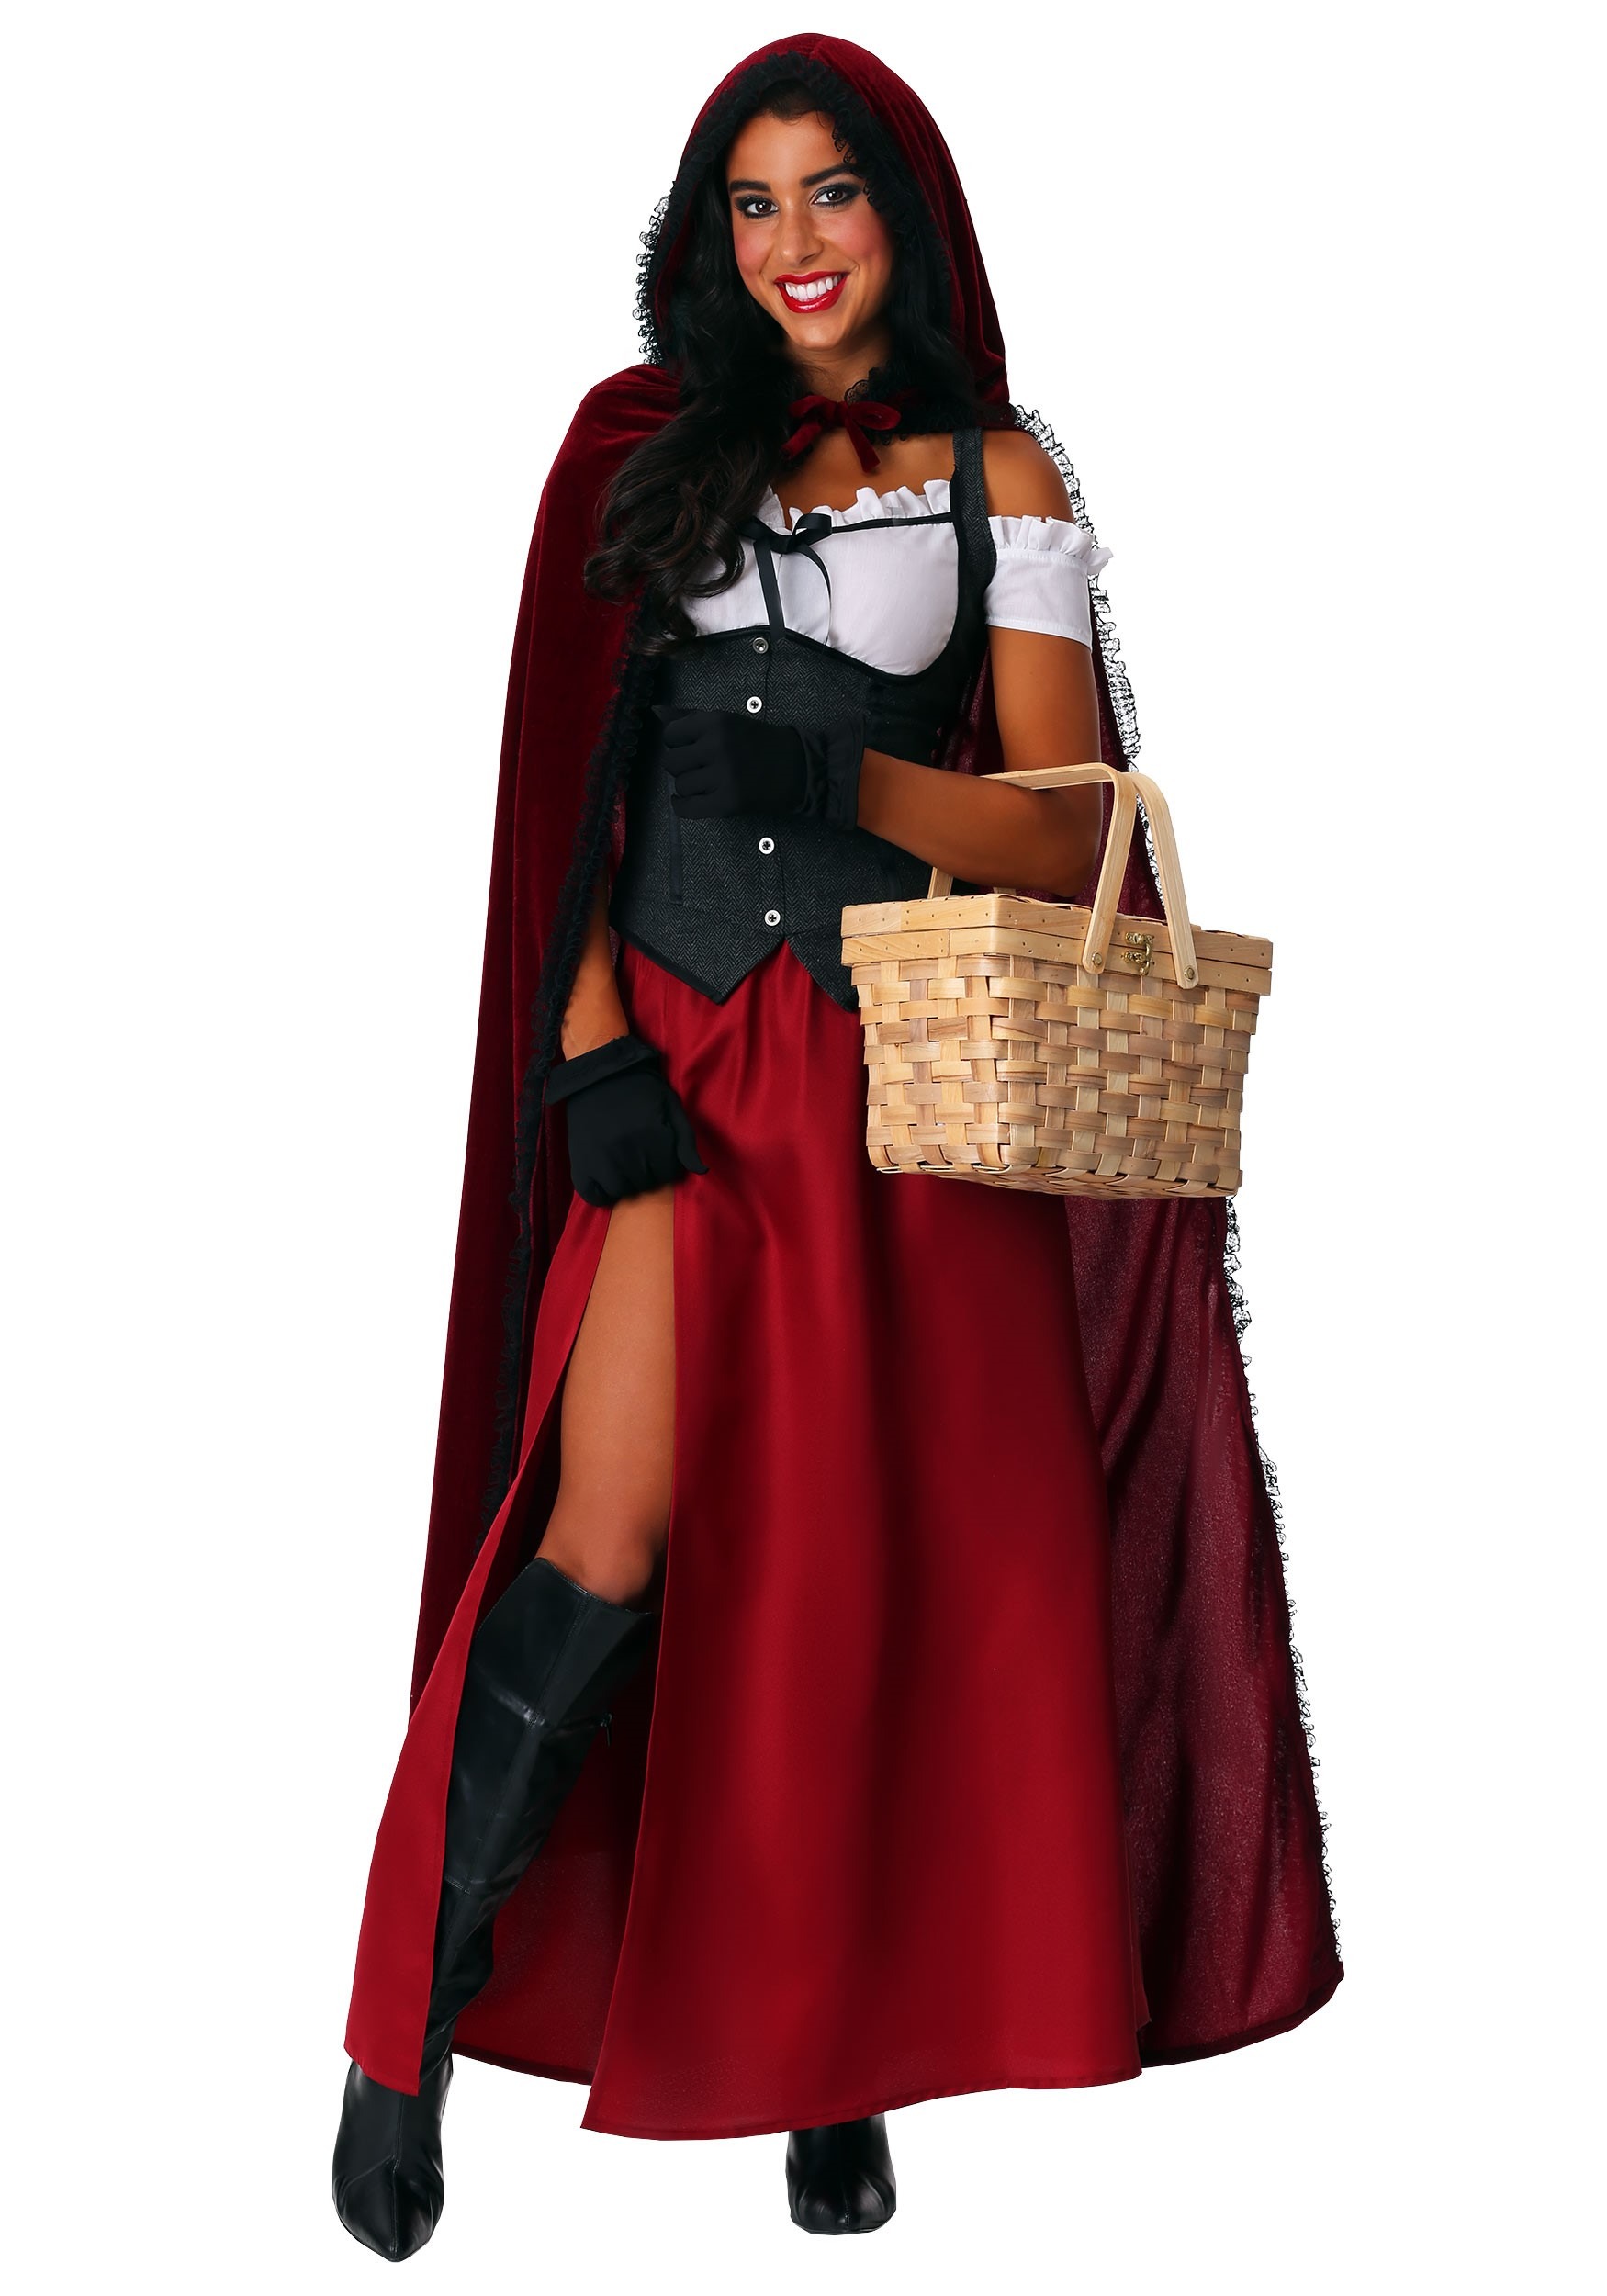 Women's Red Riding Hood Costume 